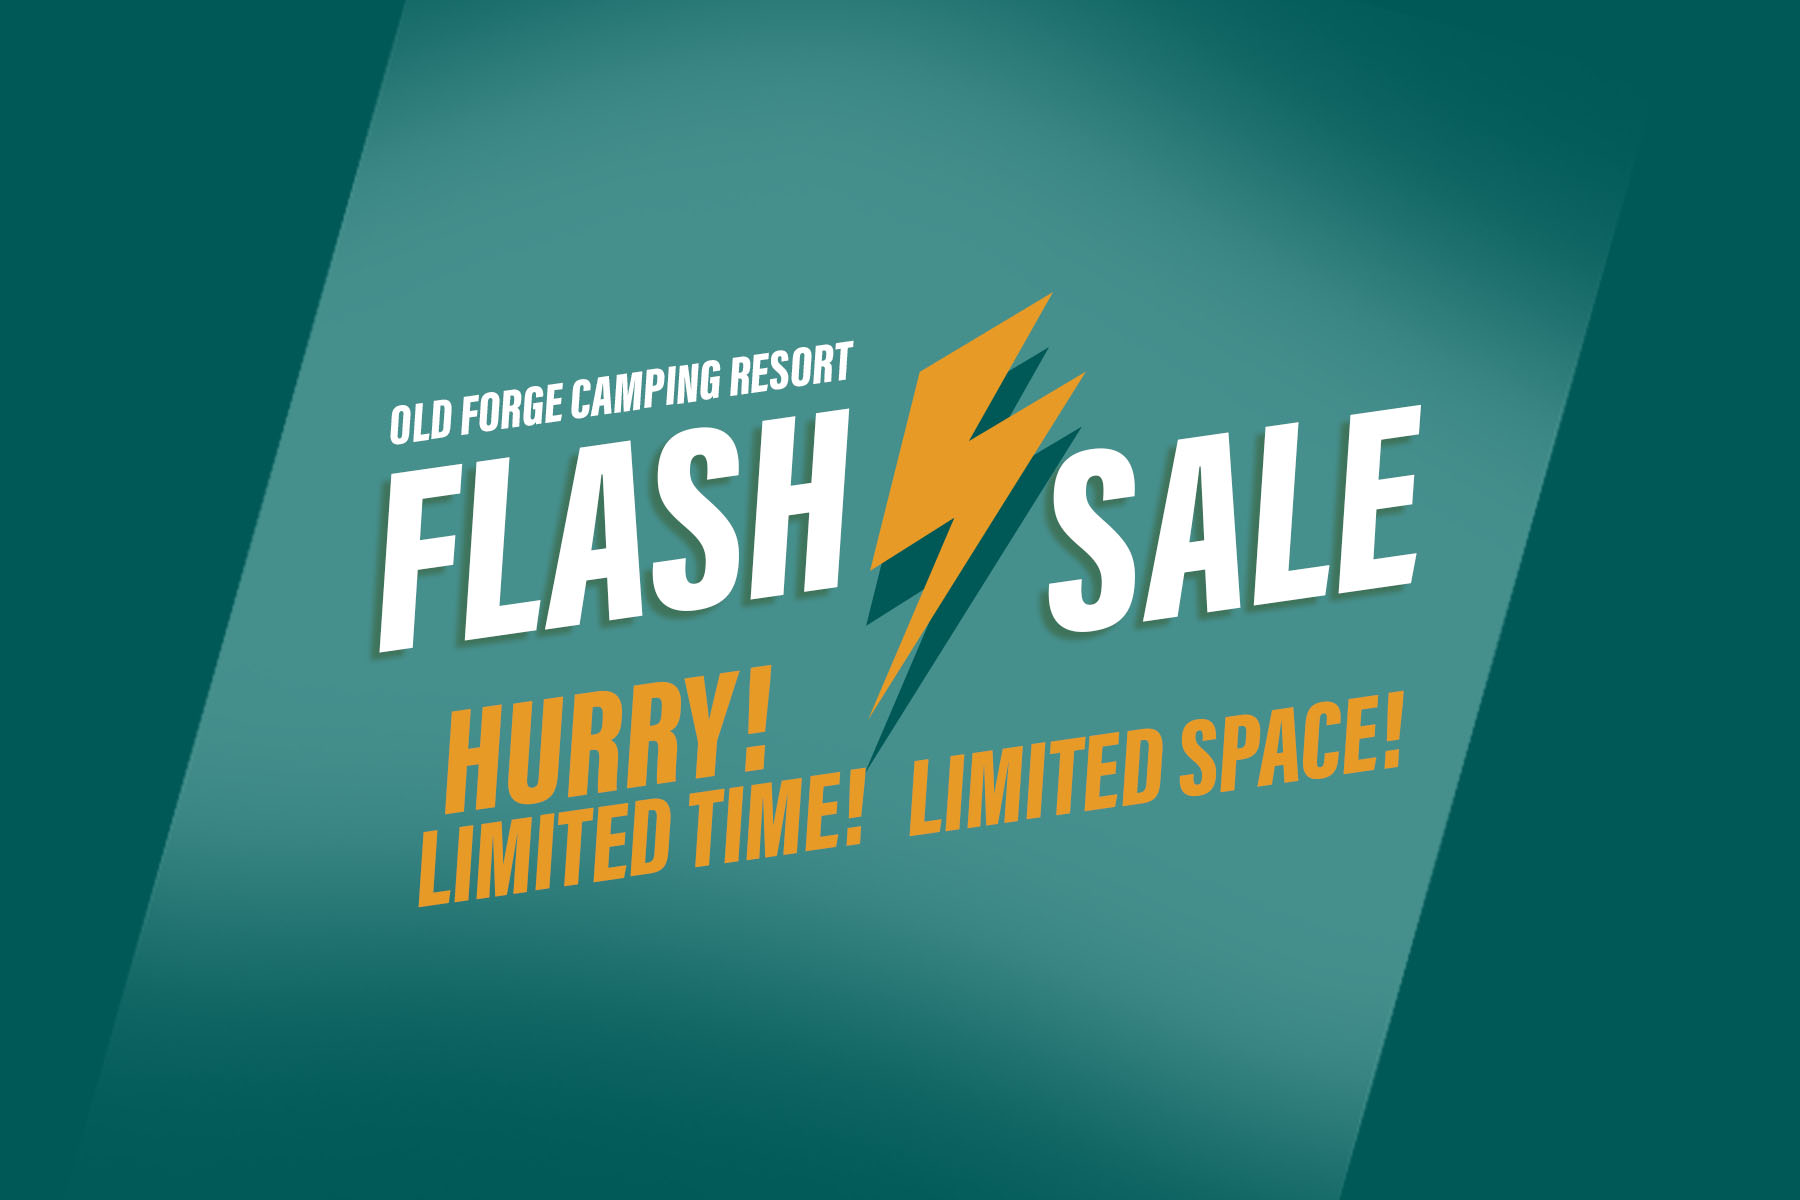 BOGO Flash Sale!